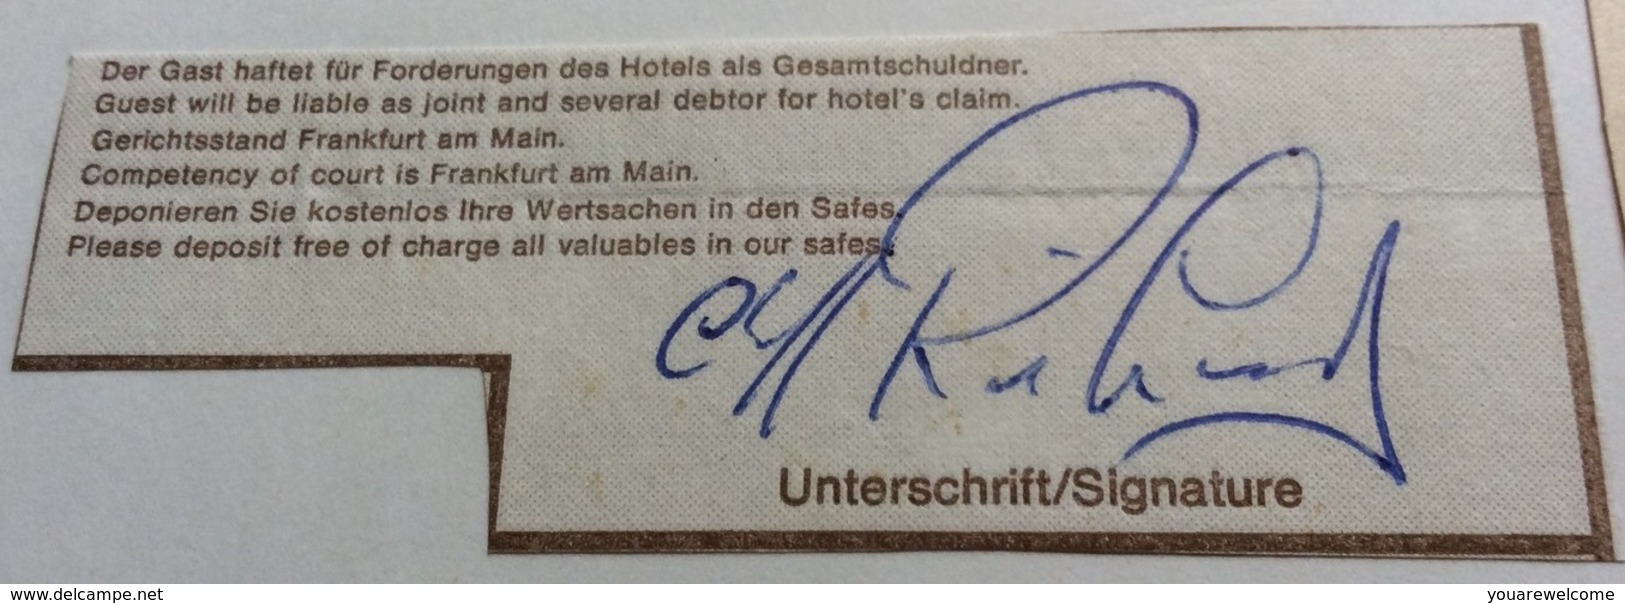 CLIFF RICHARD English Popstar Autograph Frankfurt Concert Oct. 1979 (autographe Musique - Autógrafos